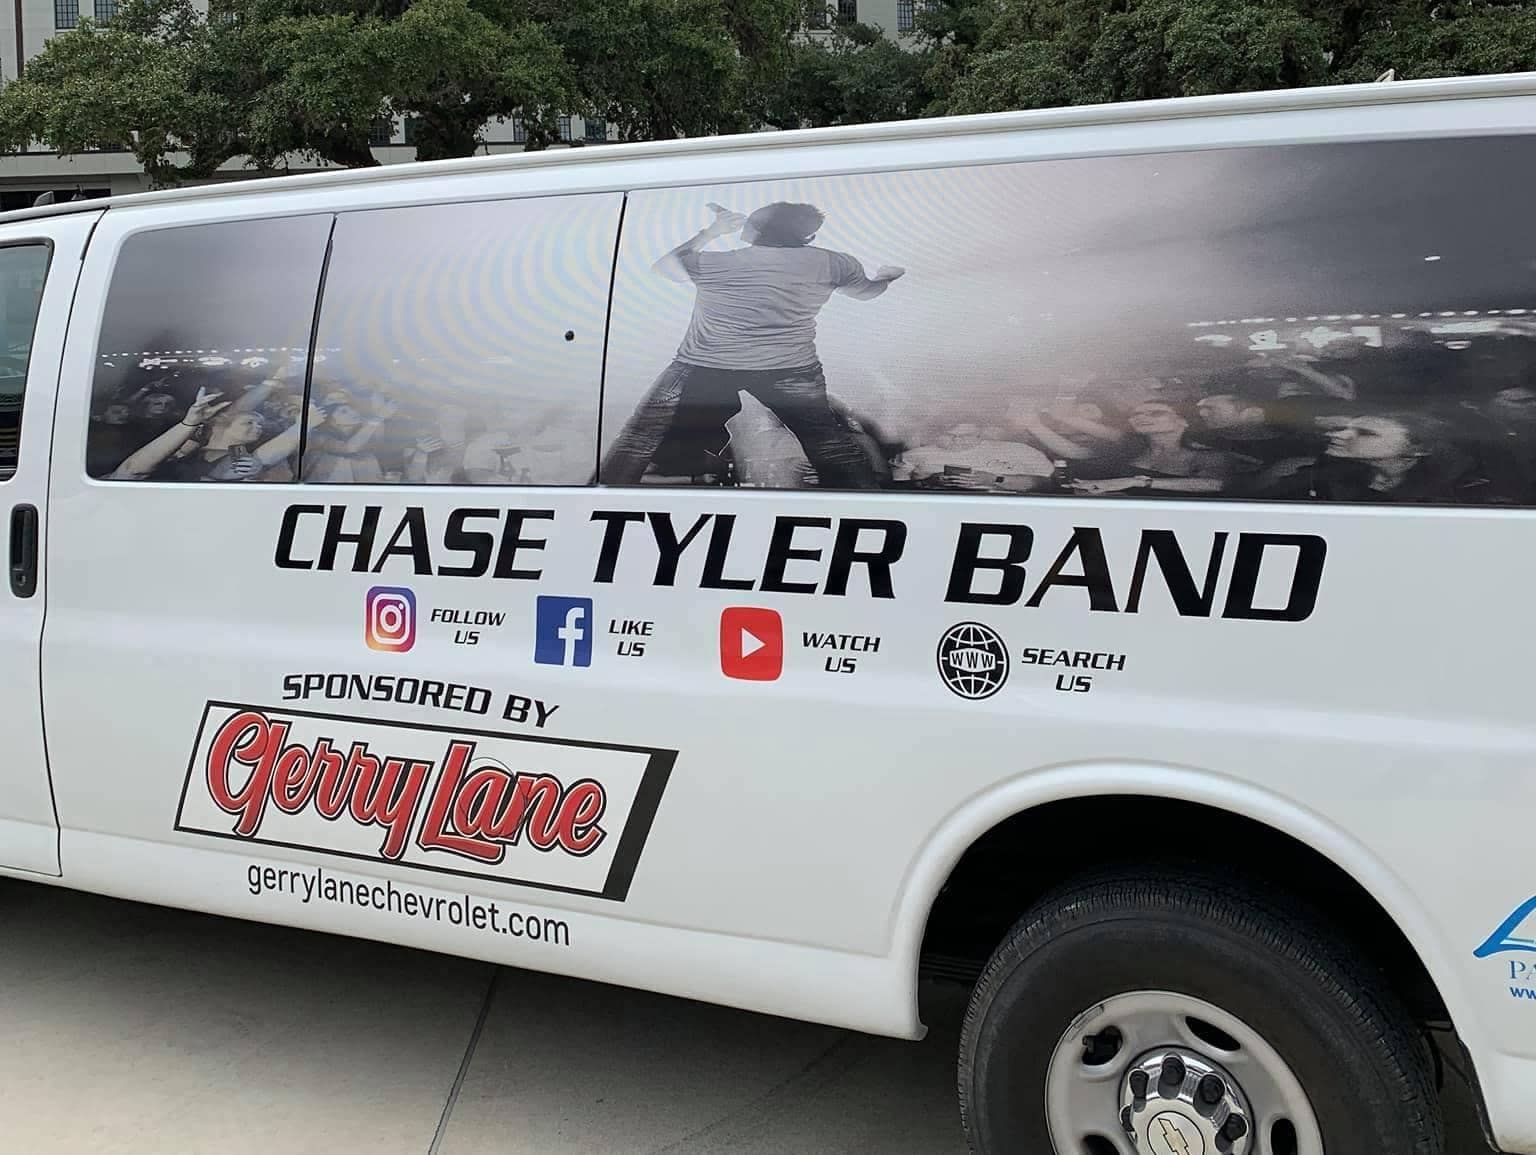 Chase Tyler Band